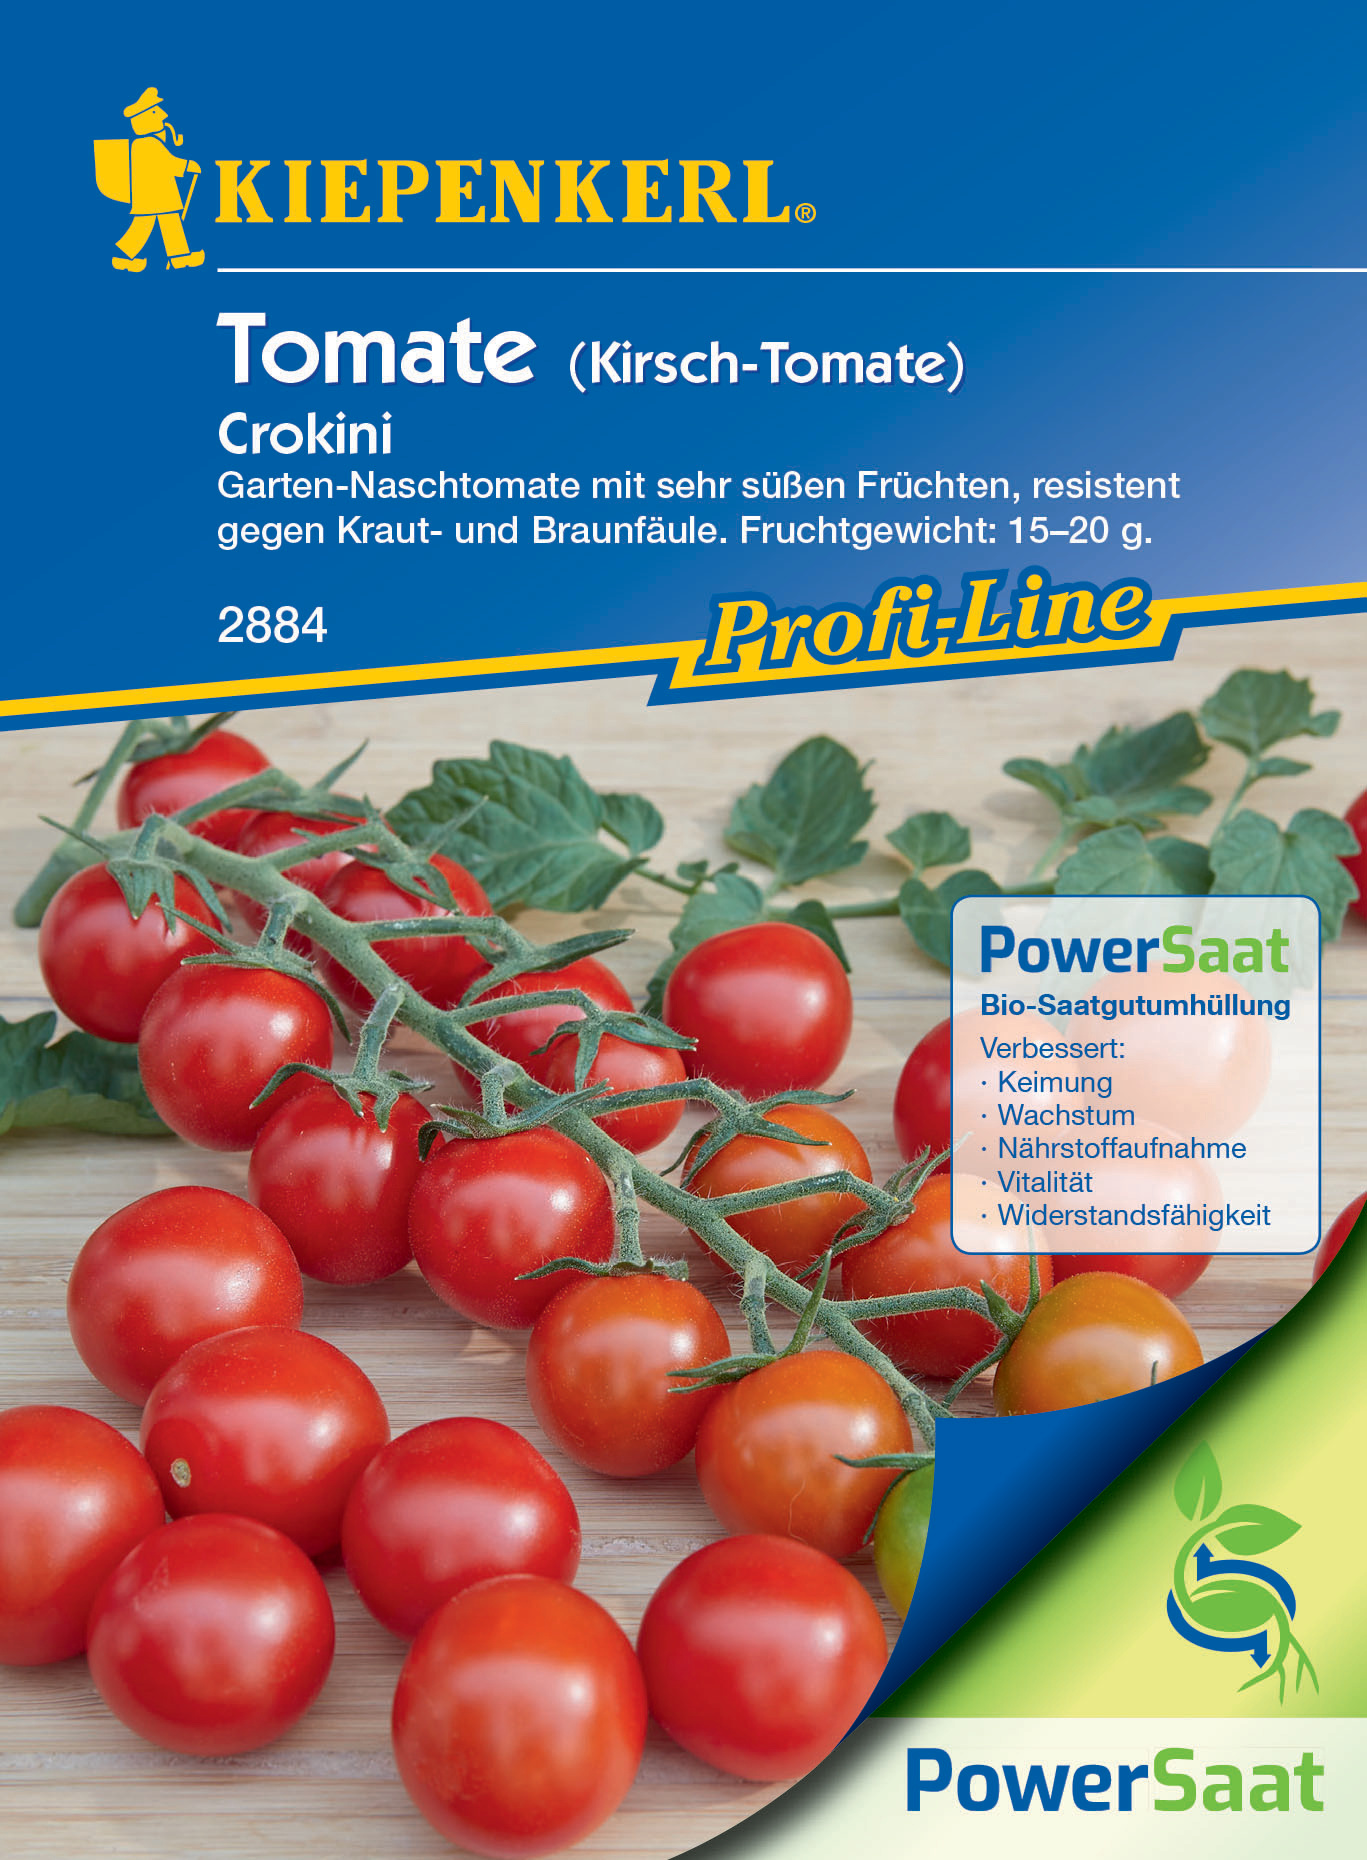 Kirsch-Tomate Crokini, F1 PowerSaat